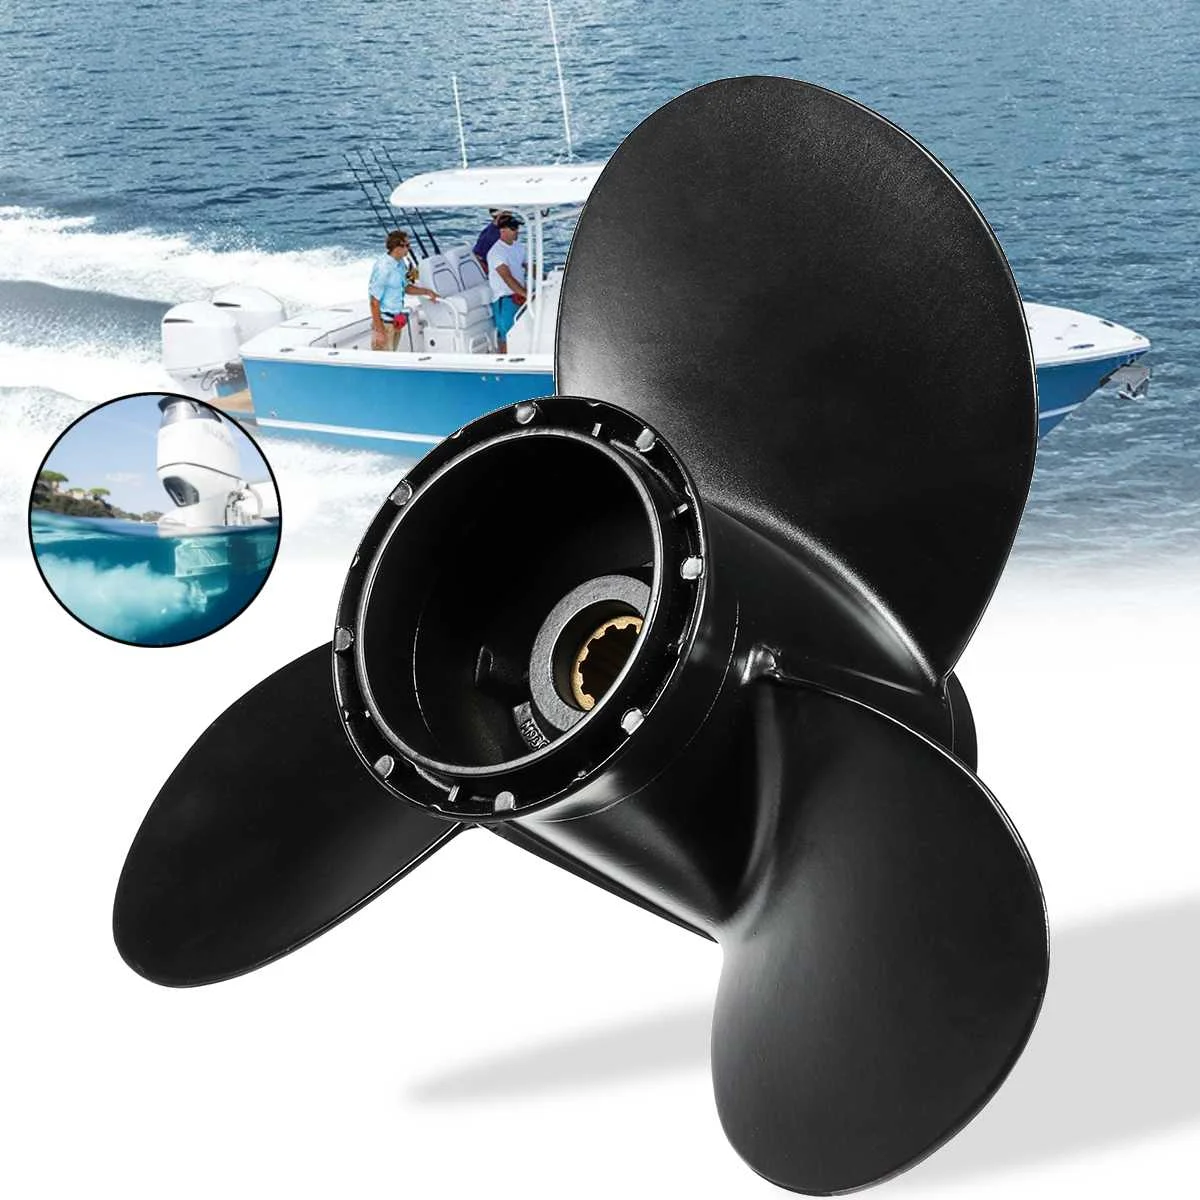 

58100-96420-019 10 1/4 x 11 Boat Outboard Propeller For Suzuki 20-30HP Aluminum Black 10 Spline Tooths R Rotation 3 Blades